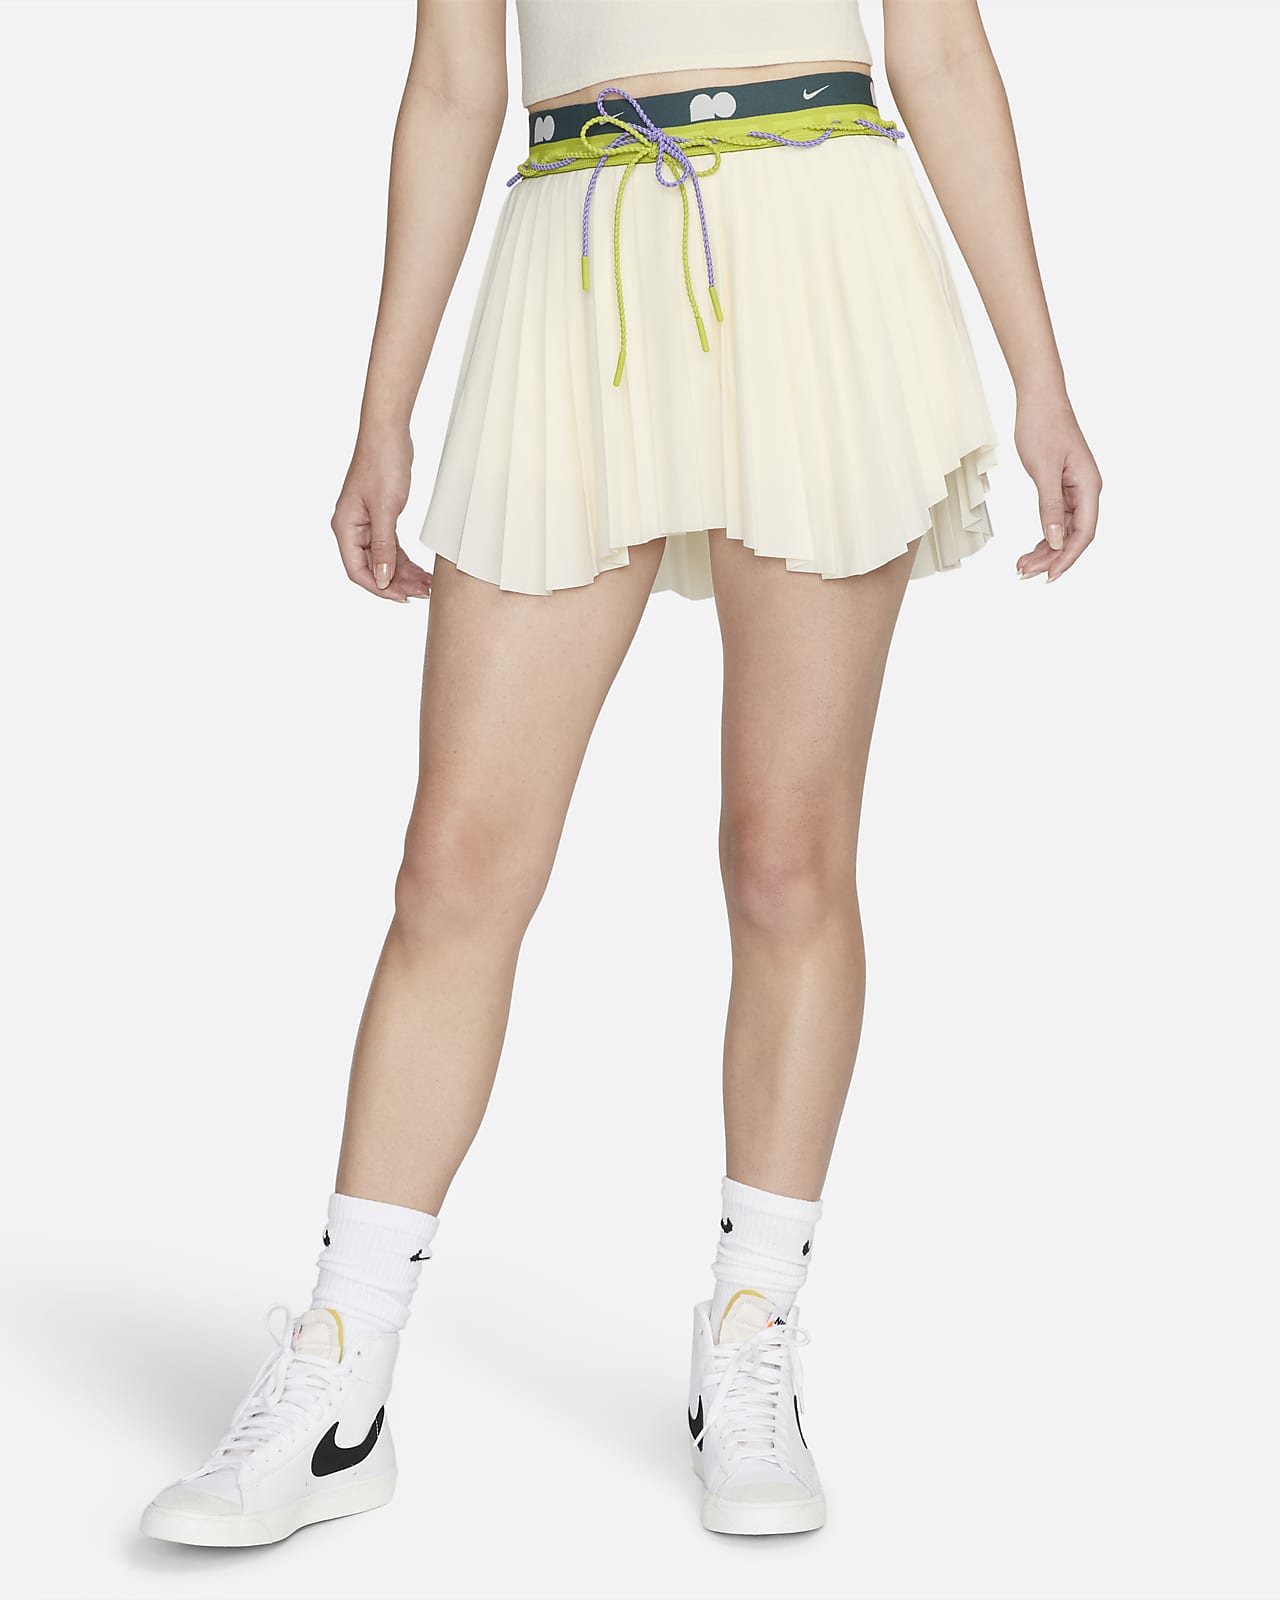 Naomi Osaka Women's Skirt